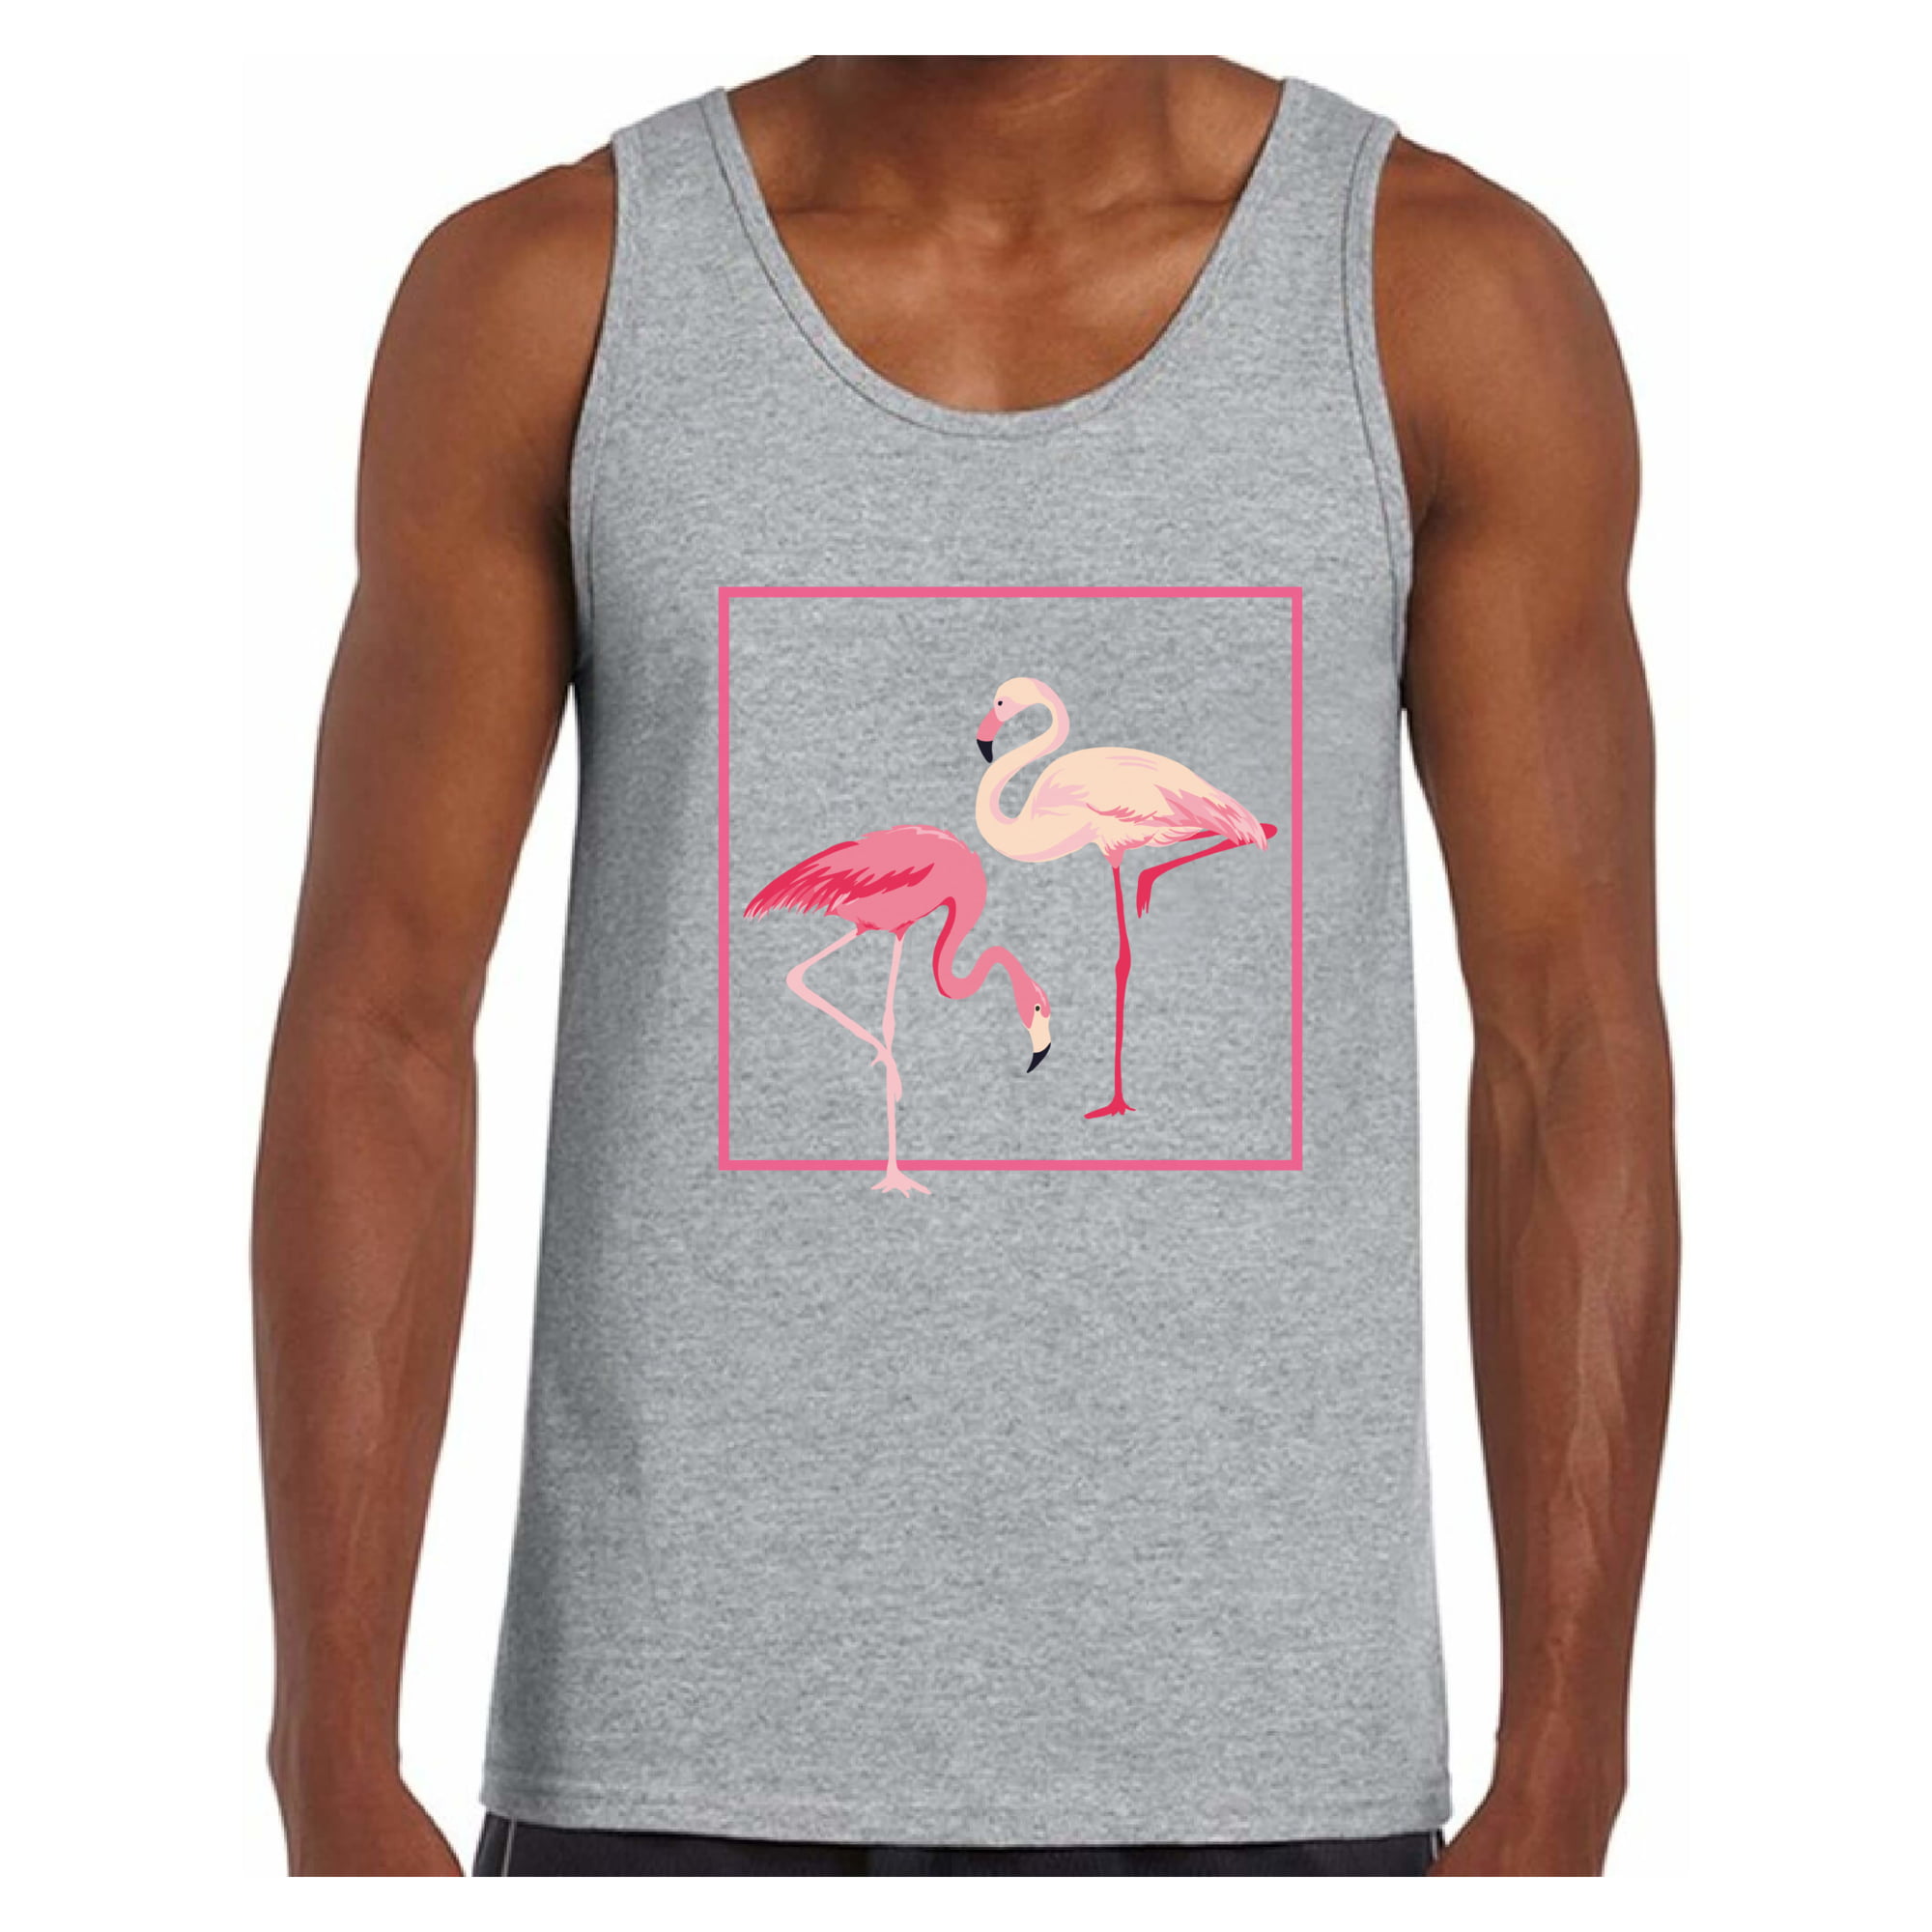 Awkward Styles Flamingo Love Tank Top for Men Pink Flamingos Tank